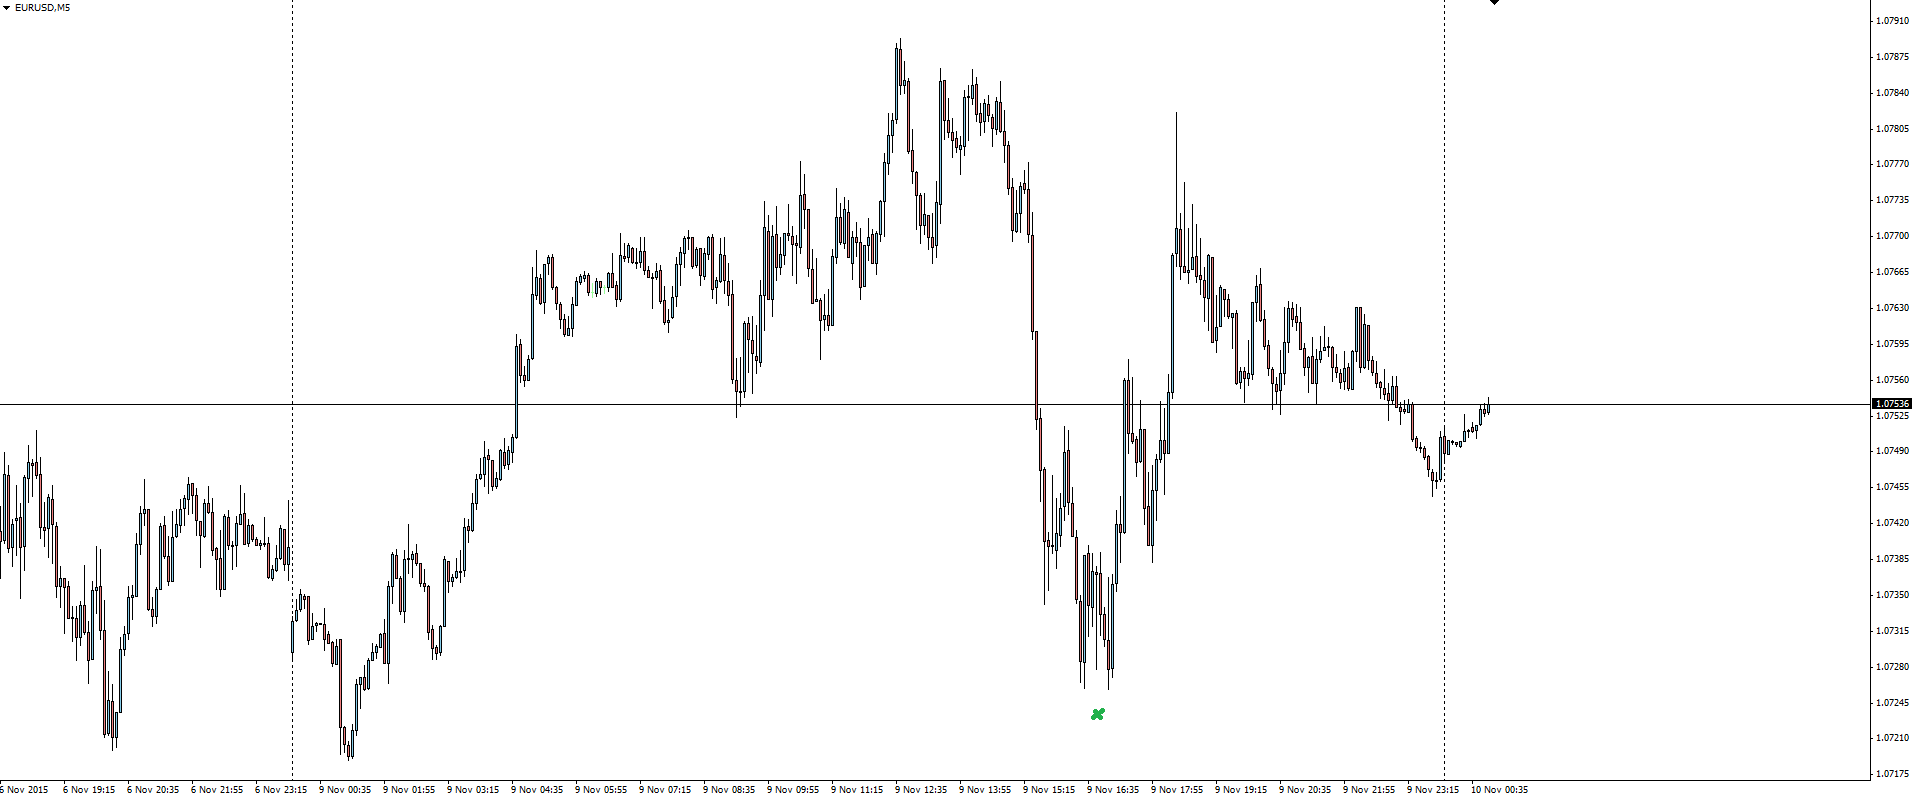 EUR/USD 5 Minute Chart